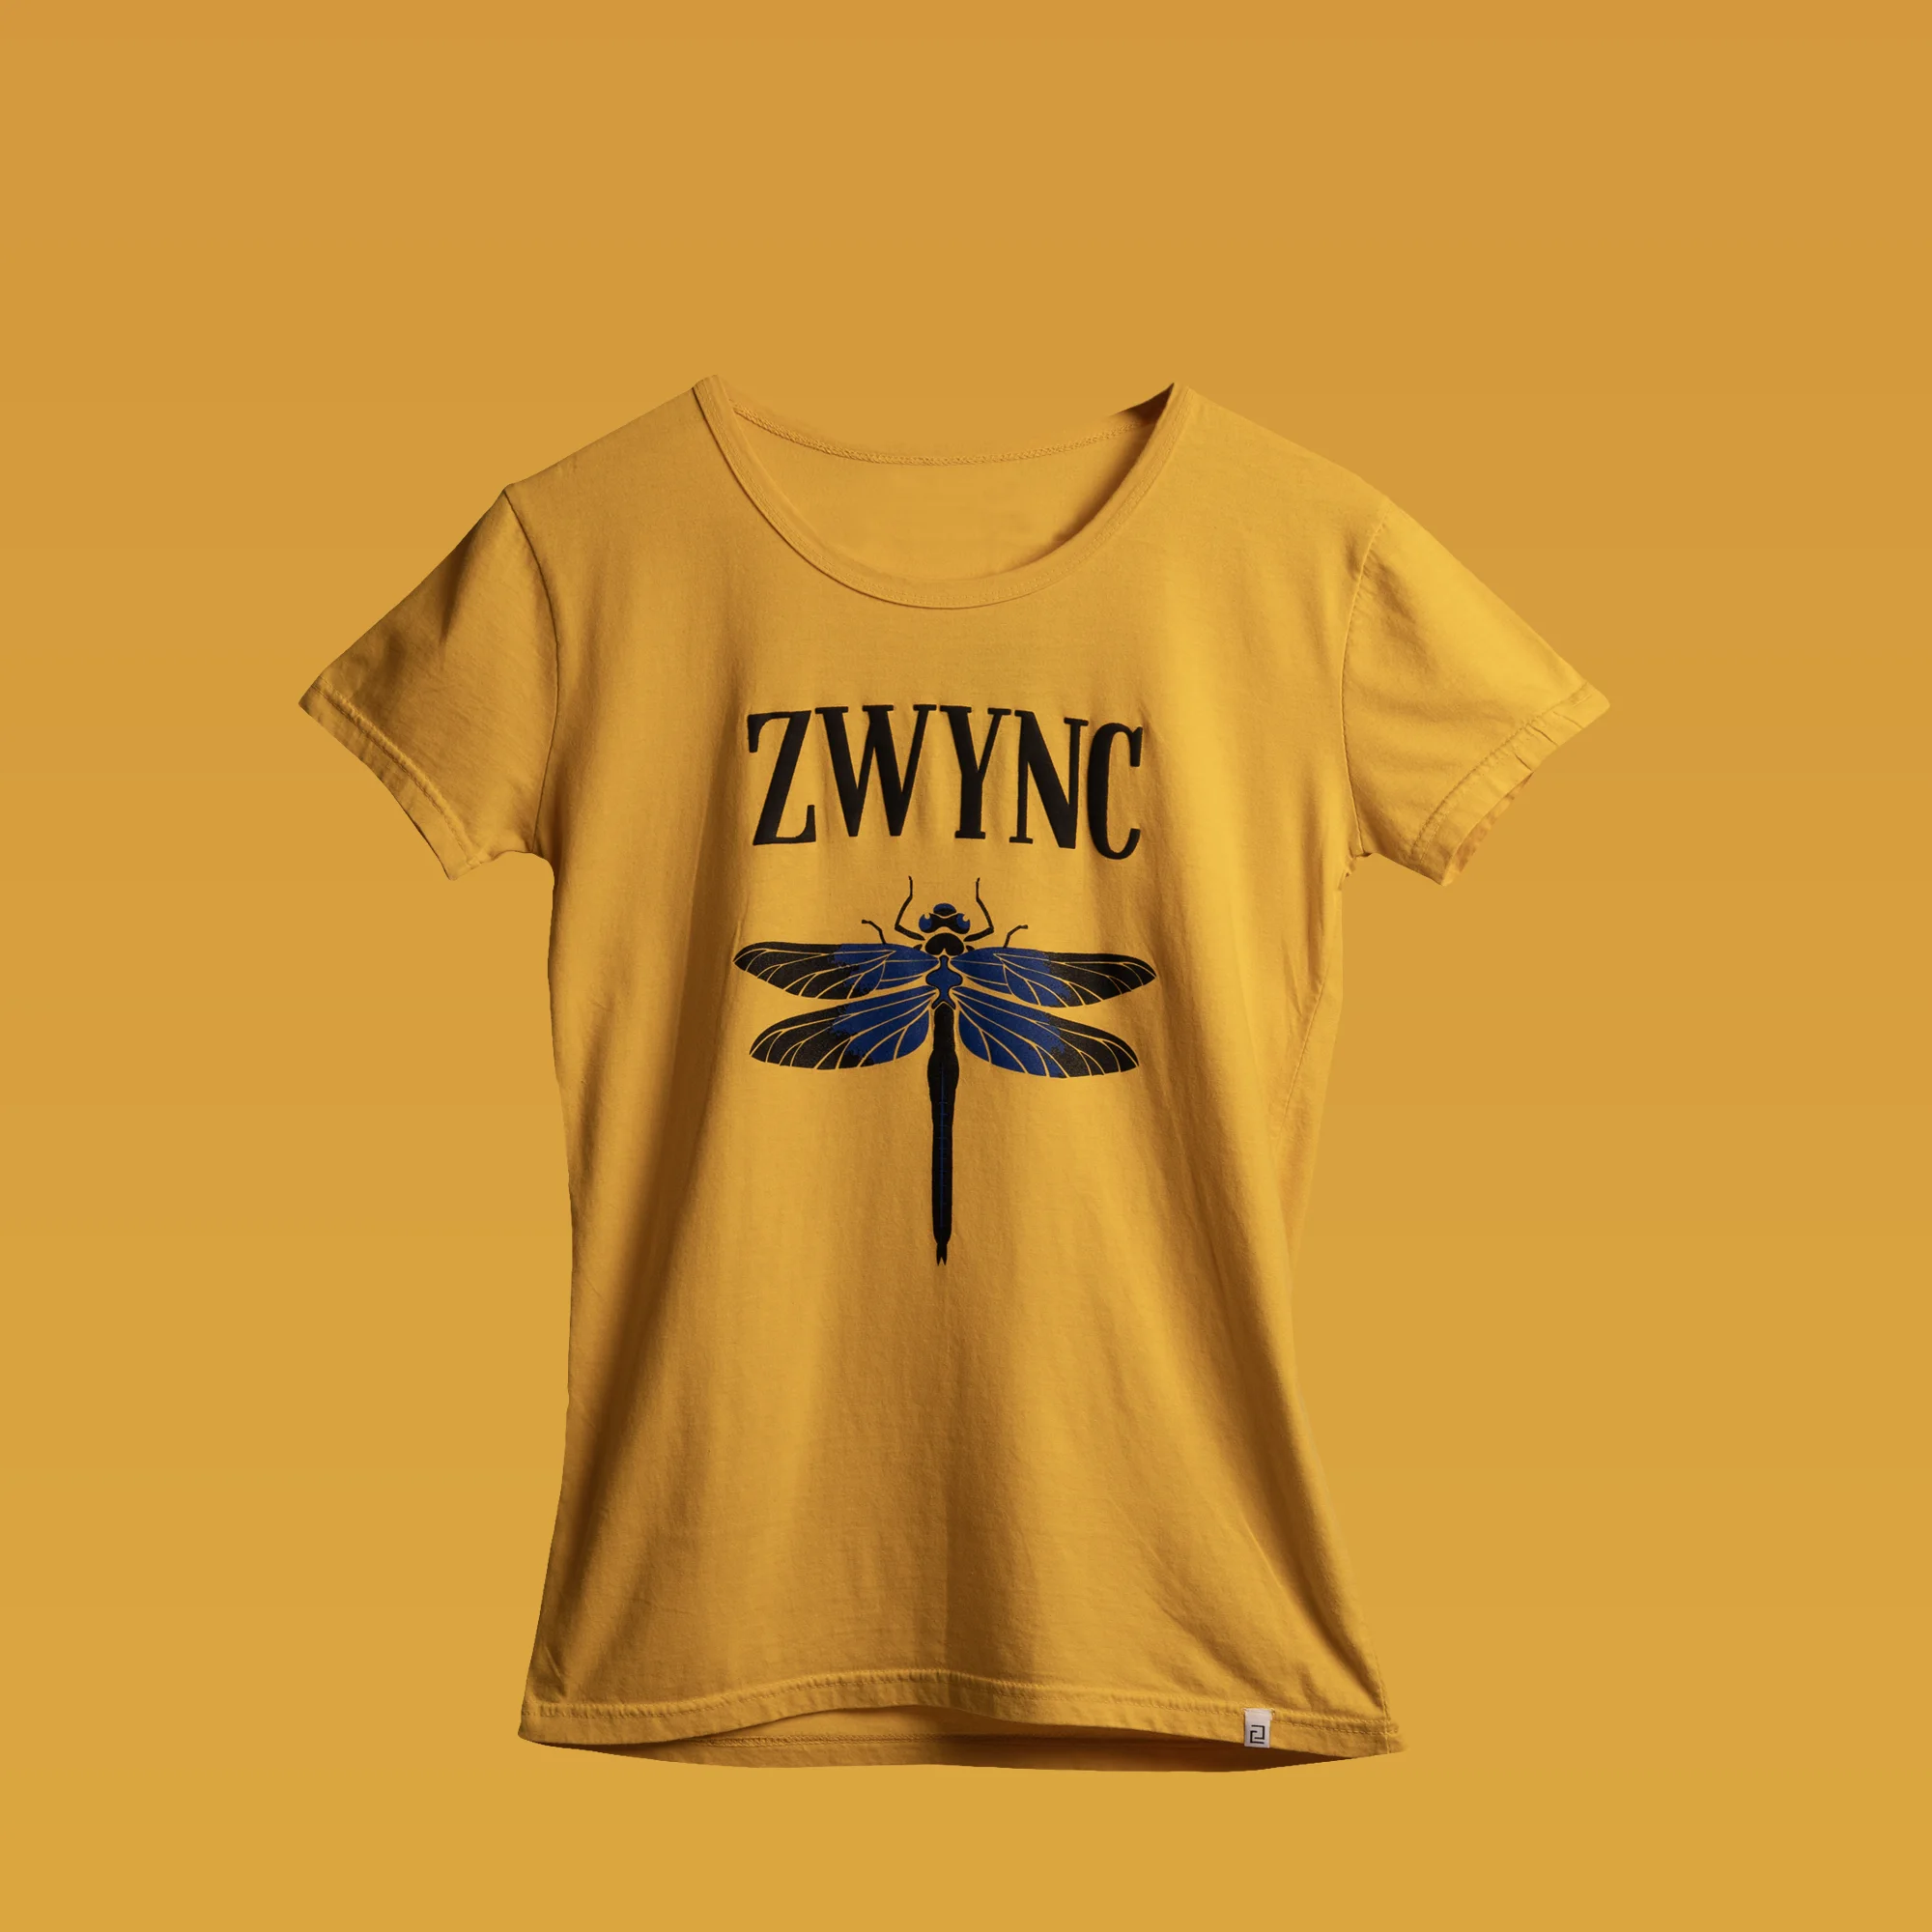 zwync Women’s Spectra Yellow Dragonfly T-shirt front design